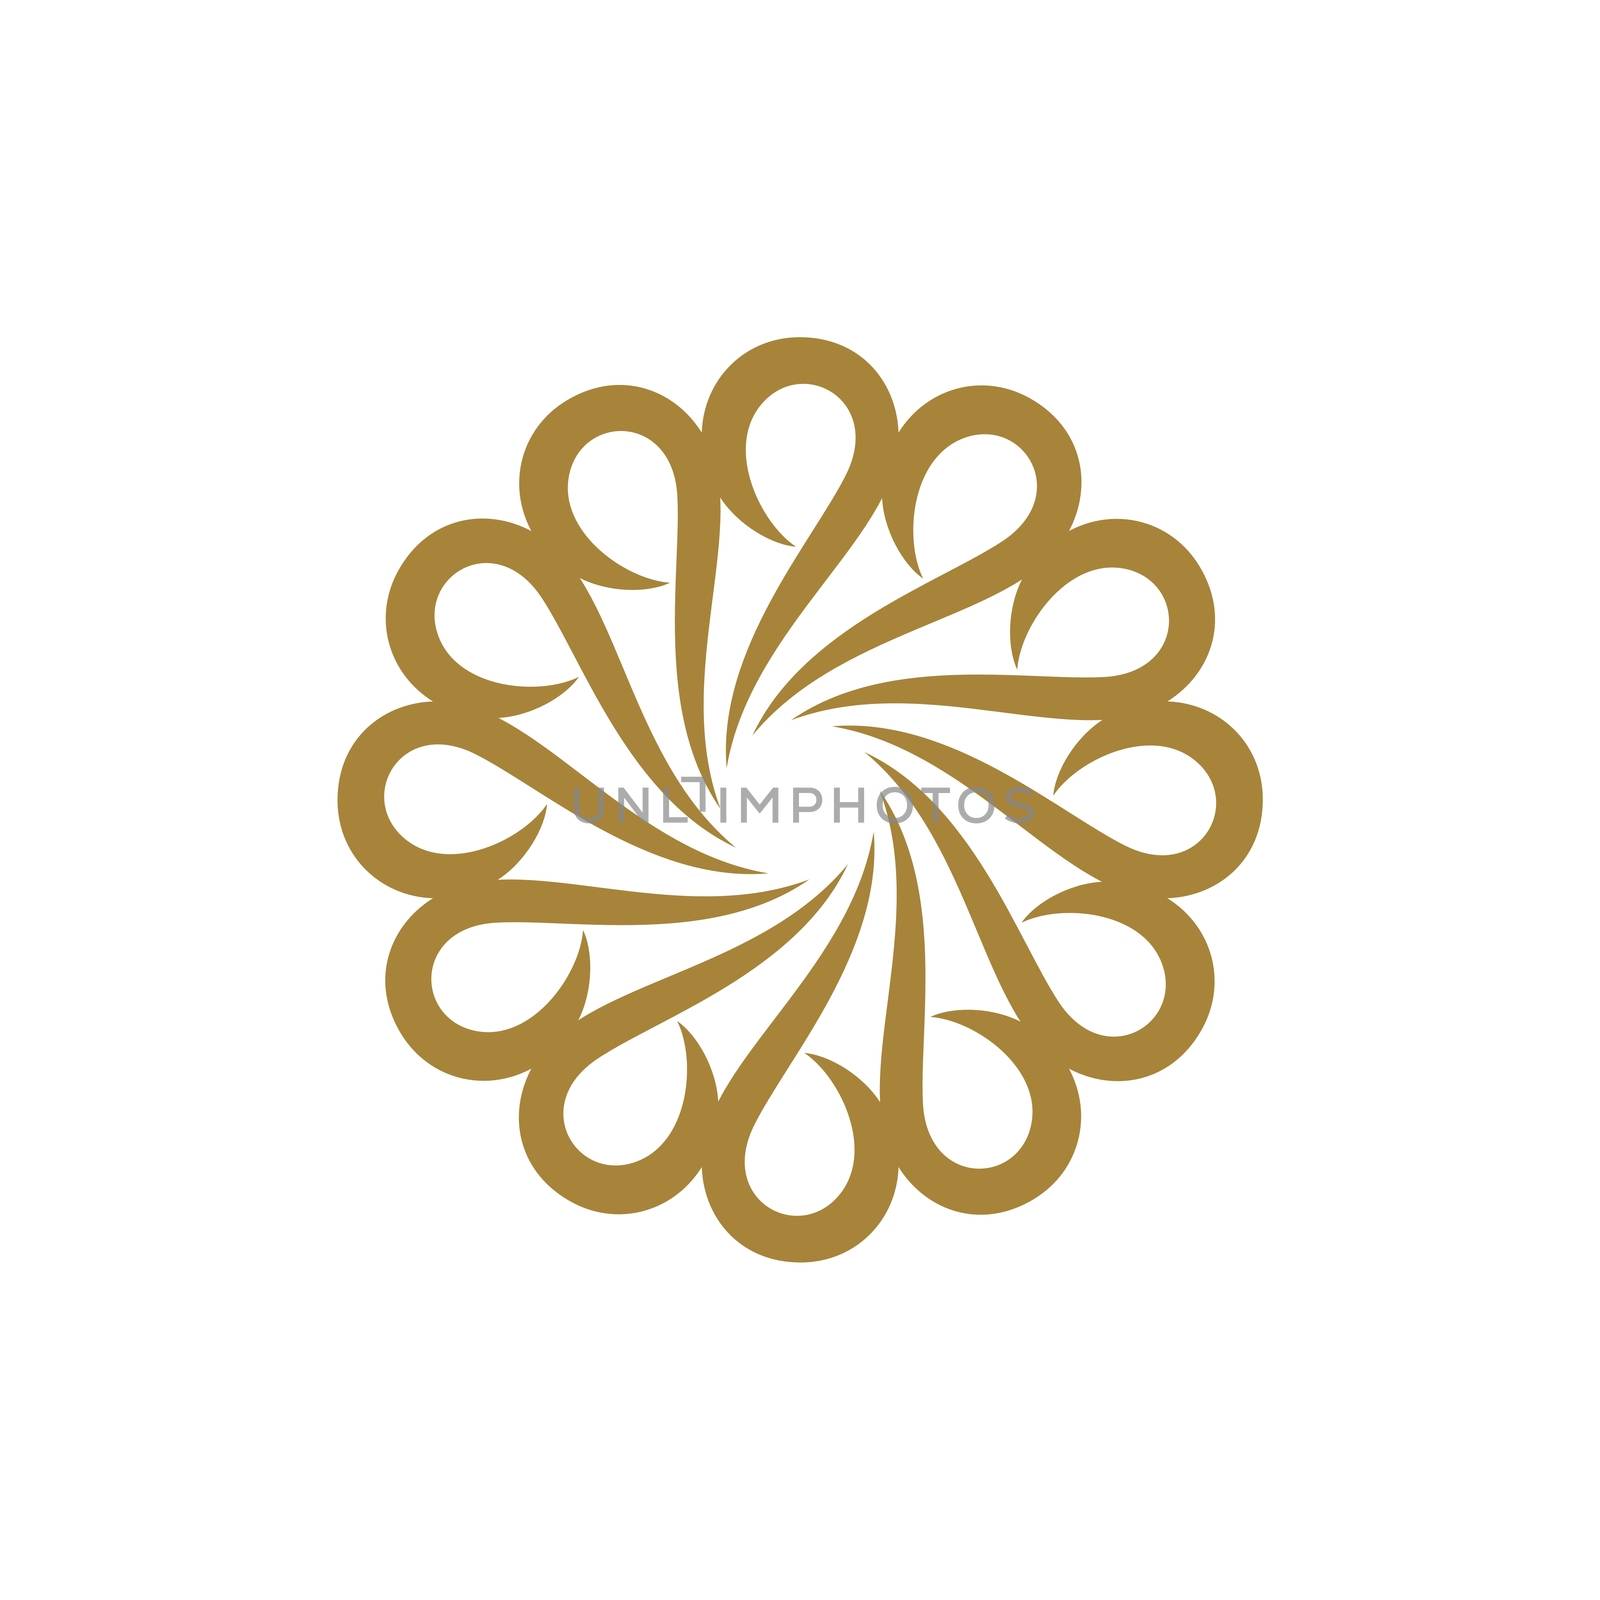 Gold Ornamental Flower Logo Template Illustration Design. Vector EPS 10. by soponyono1